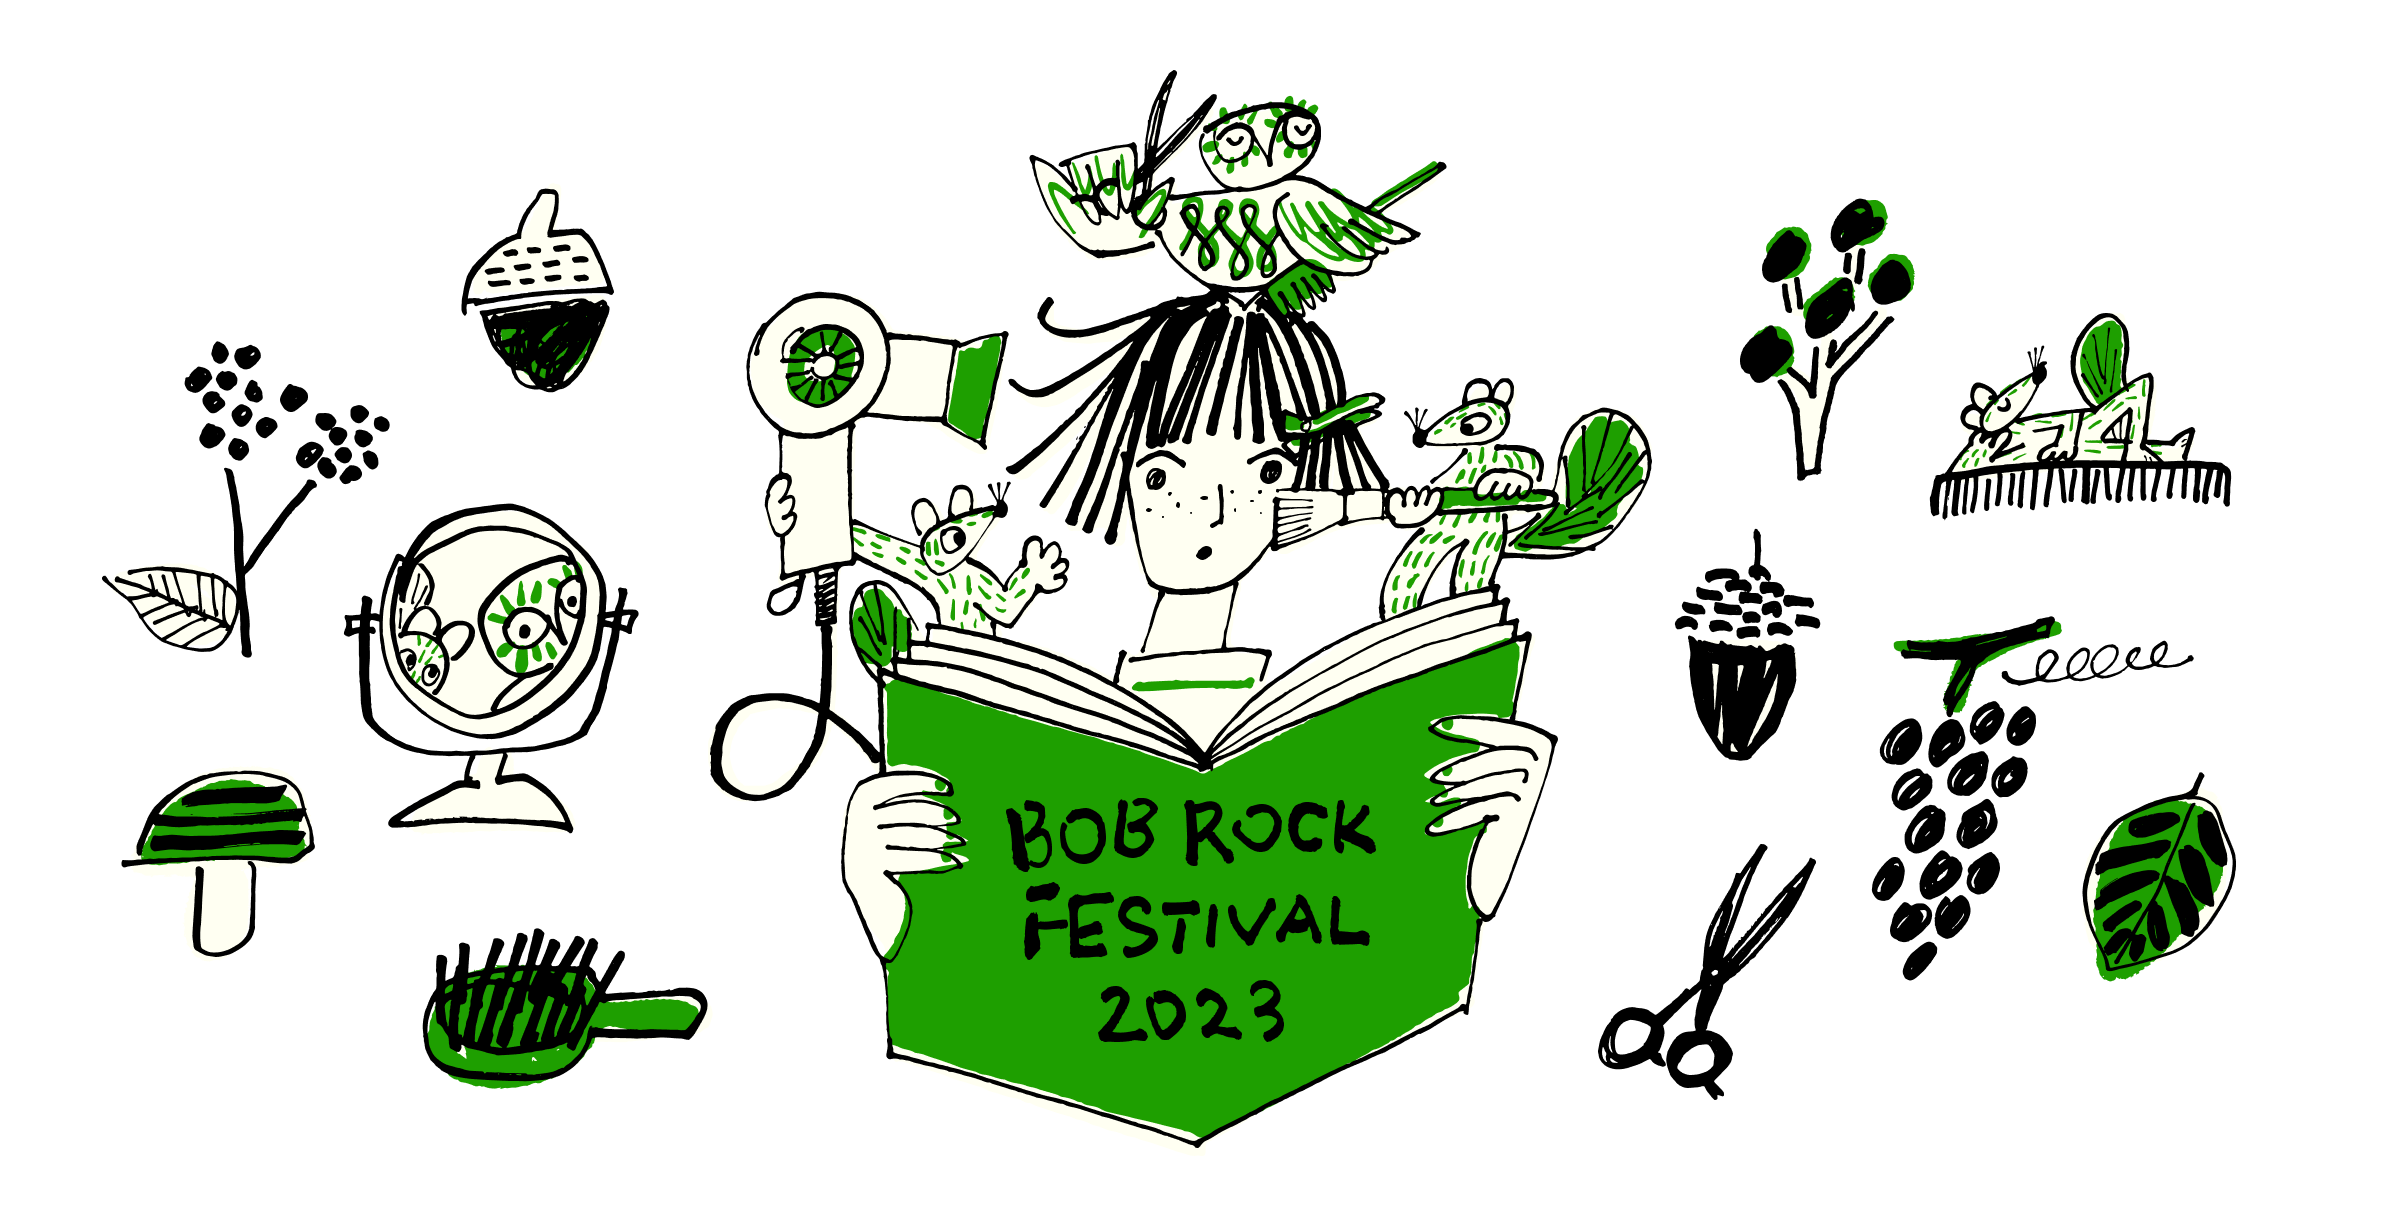 BOBROCK FESTIVAL 2023 2023.10.23 mon 服部緑地野外音楽堂